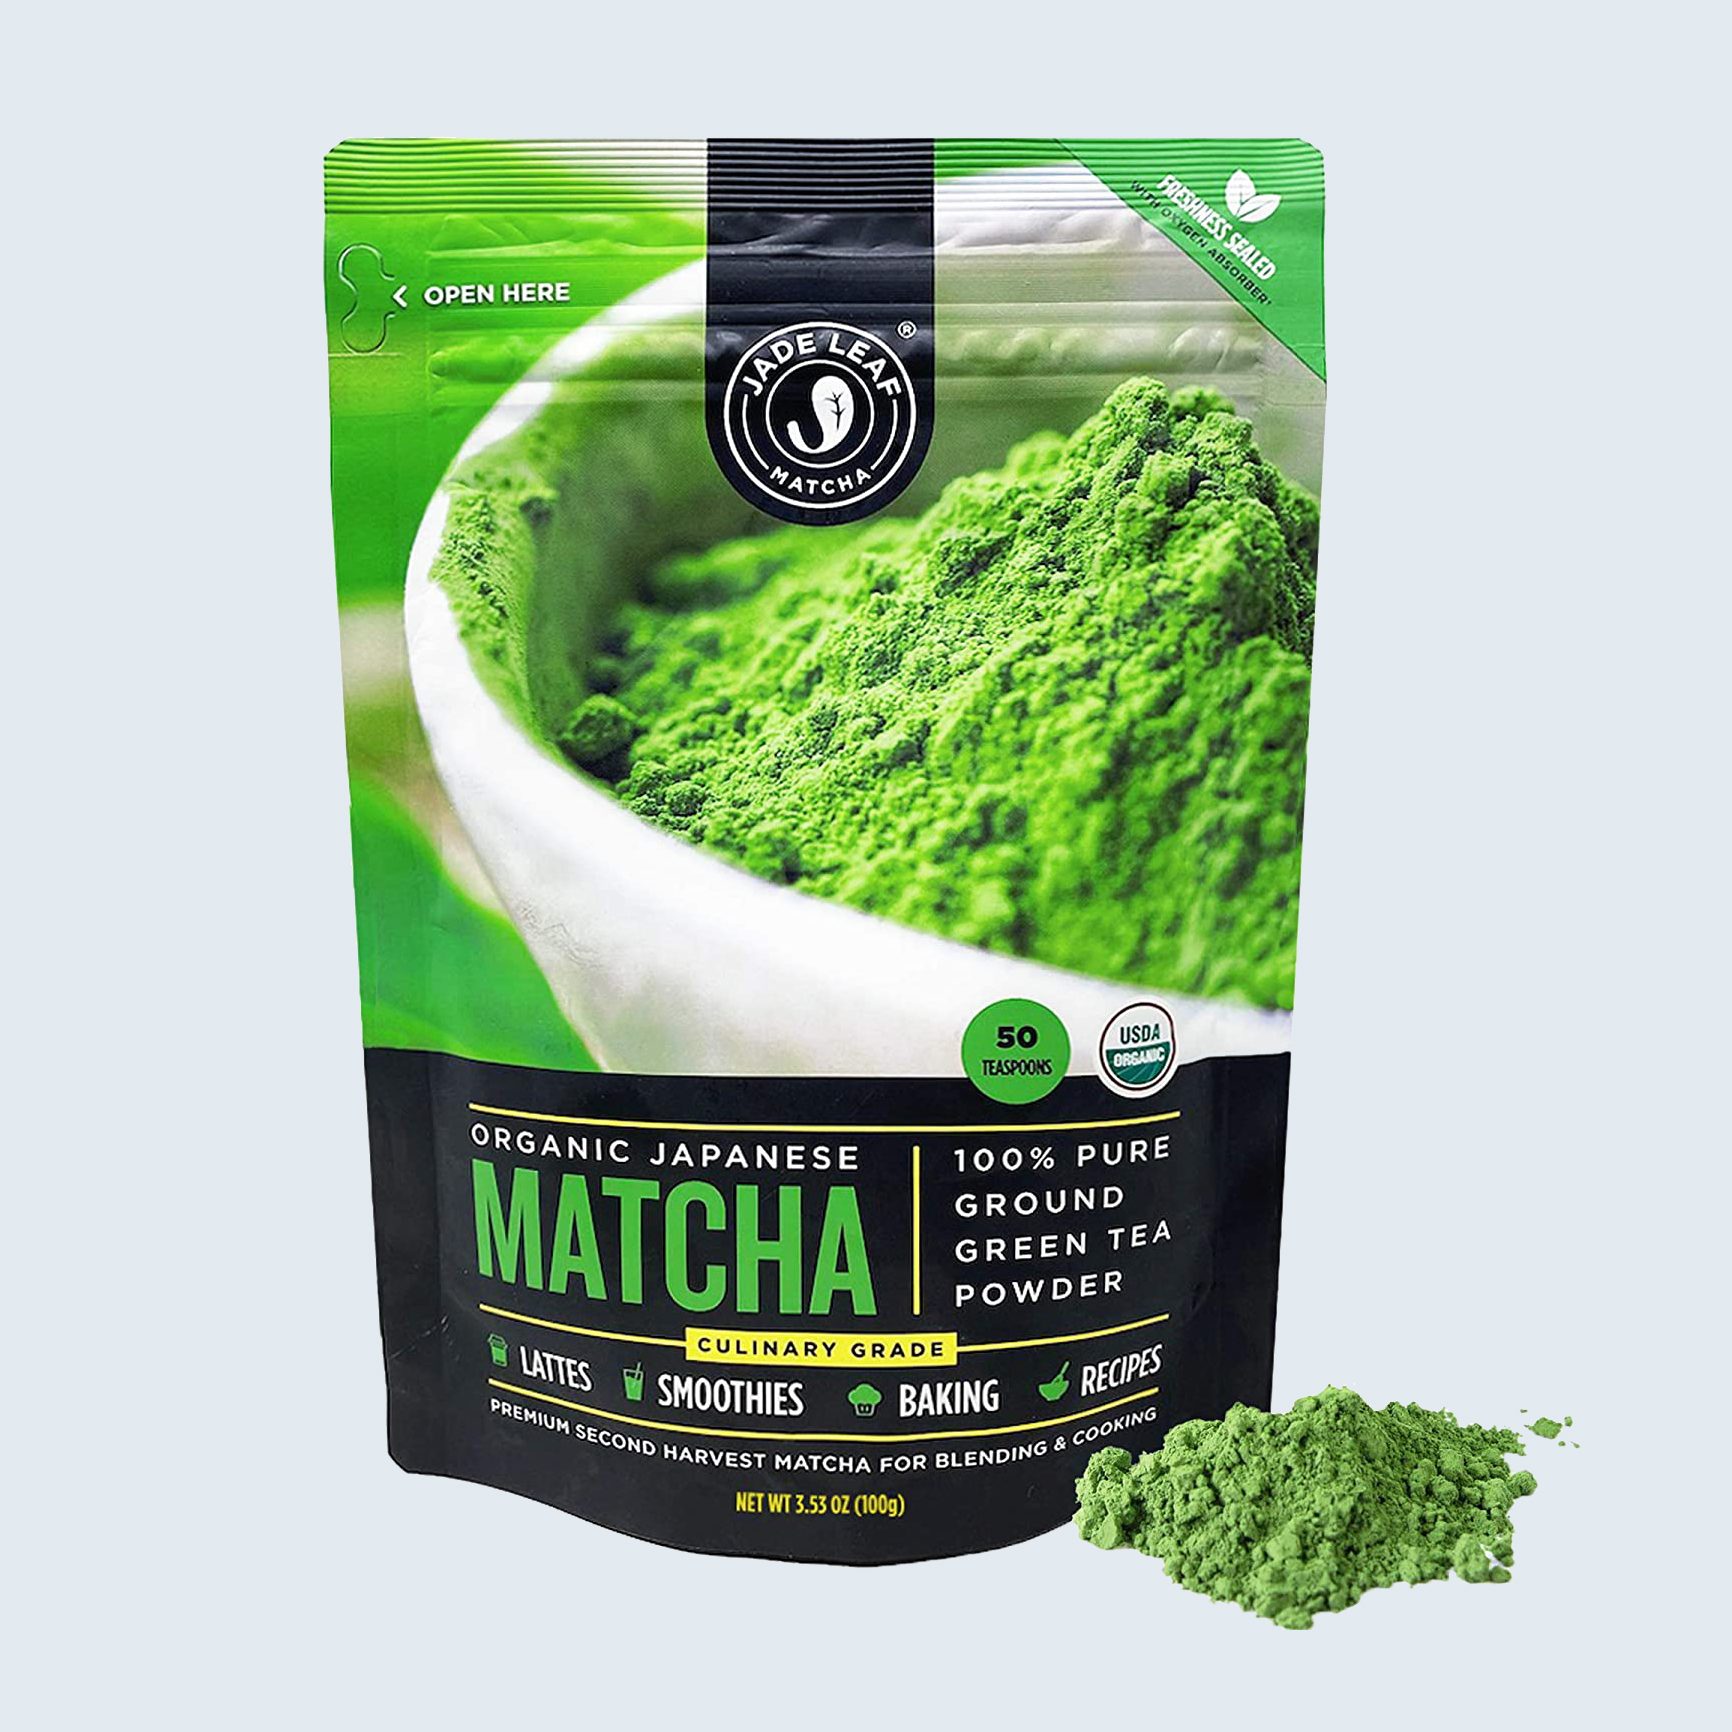 Matcha powder package